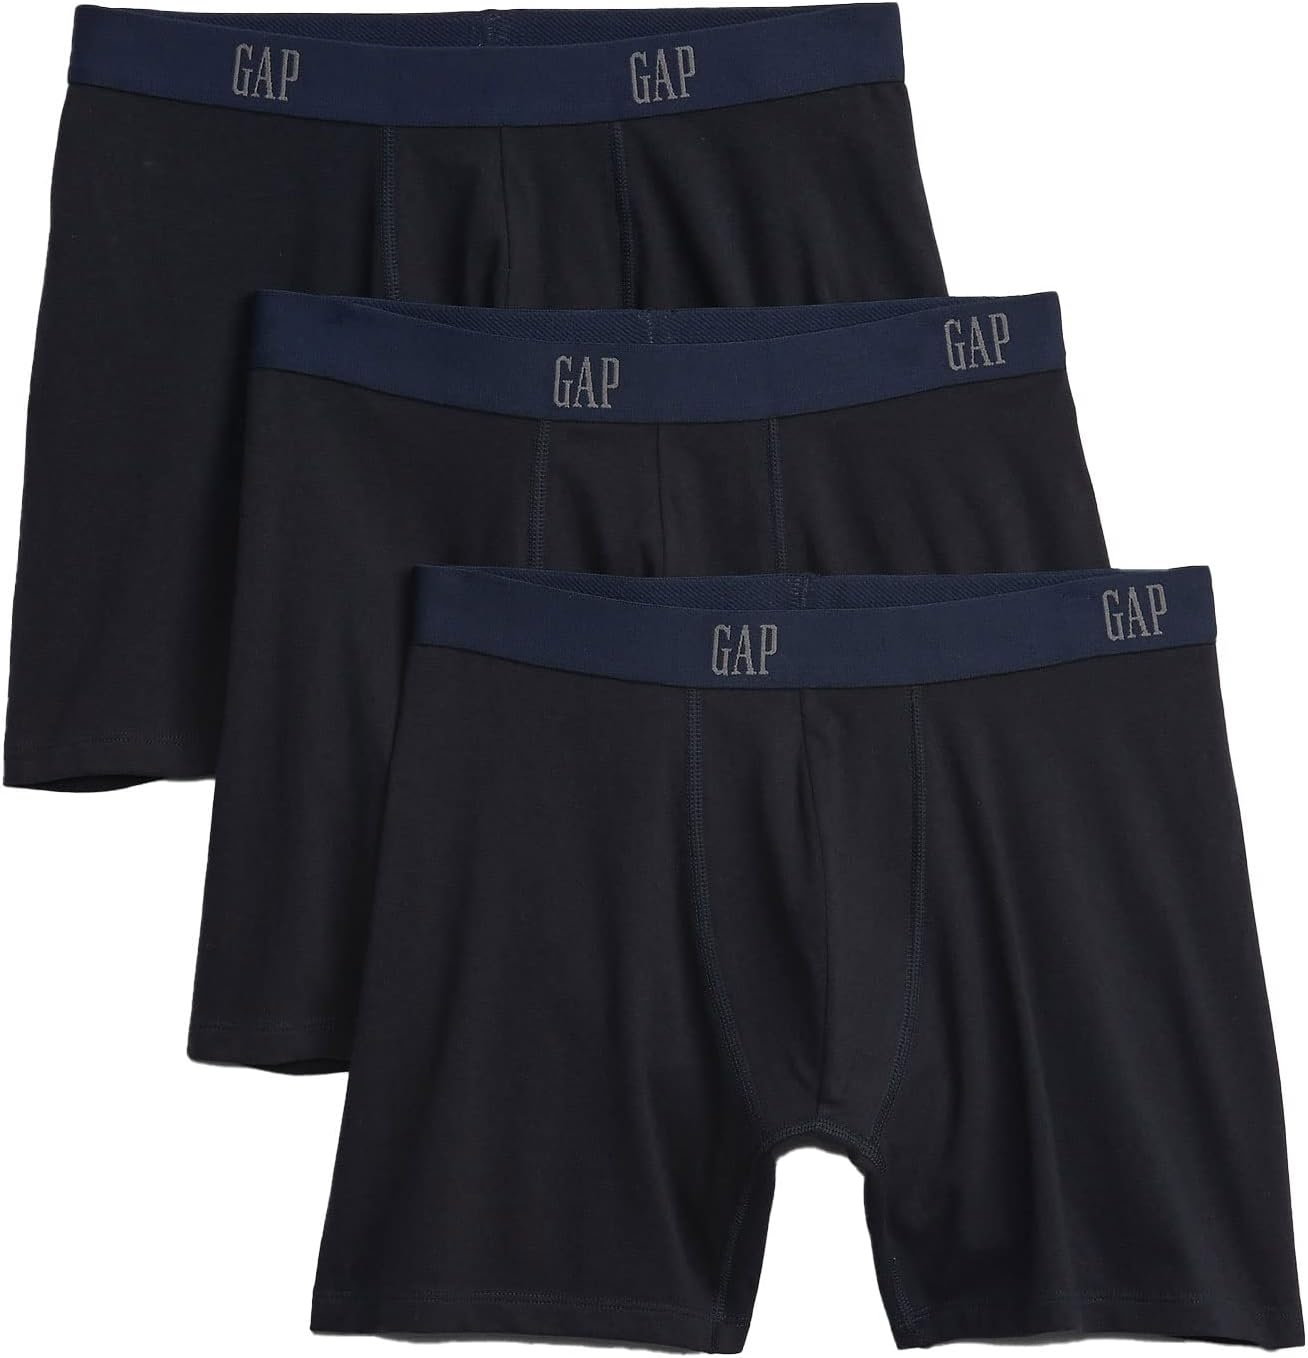 GAP Men's 3-Pack Boxer Brief Underpants Underwear